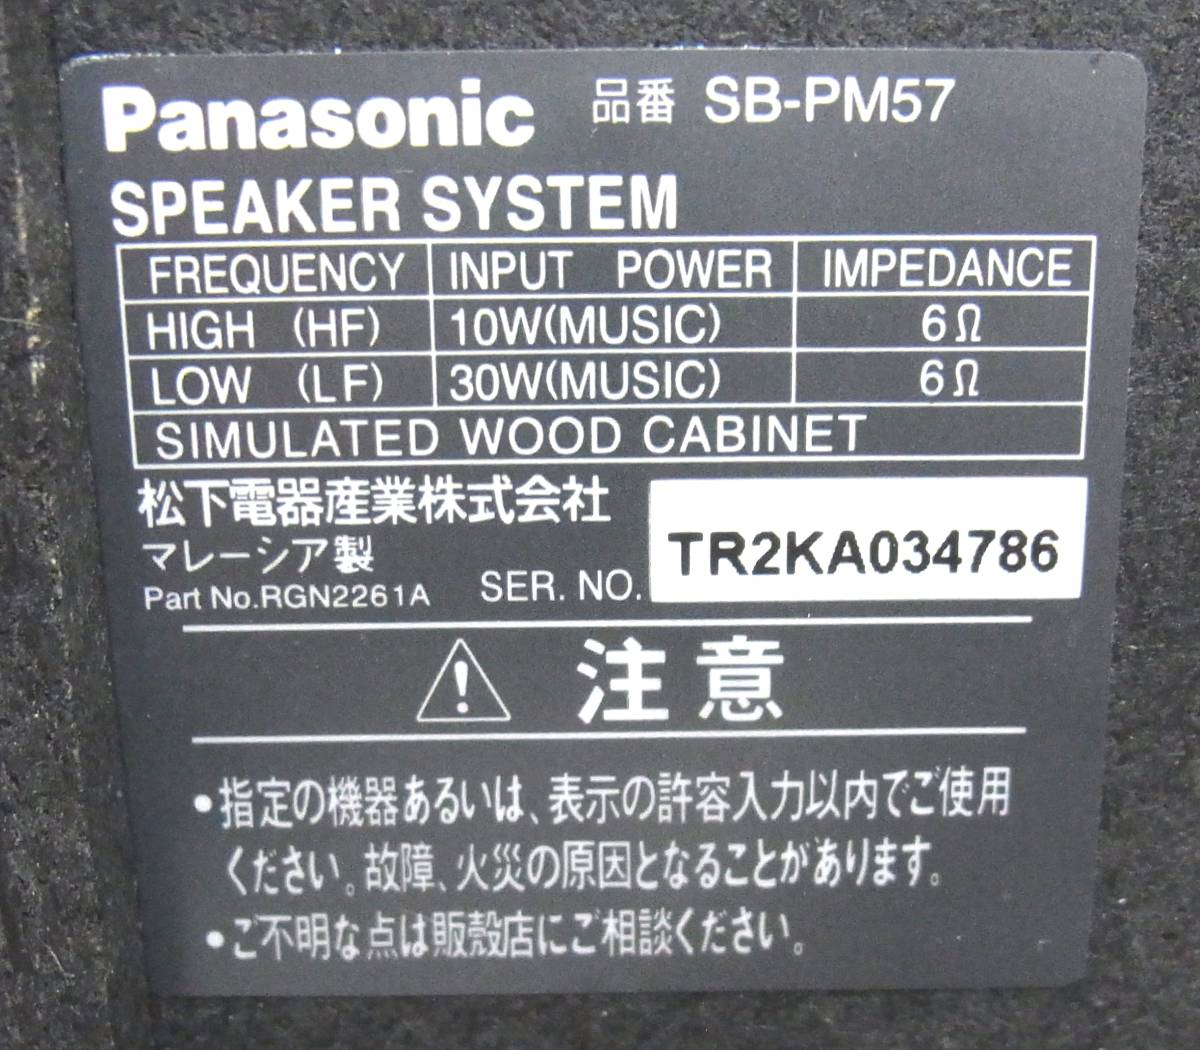 Panasonic Panasonic SA-PM57MD 2002 год производства MD магнитола динамик стерео аудио retro электризация проверка settled текущее состояние доставка перемещение ... Lucky!!